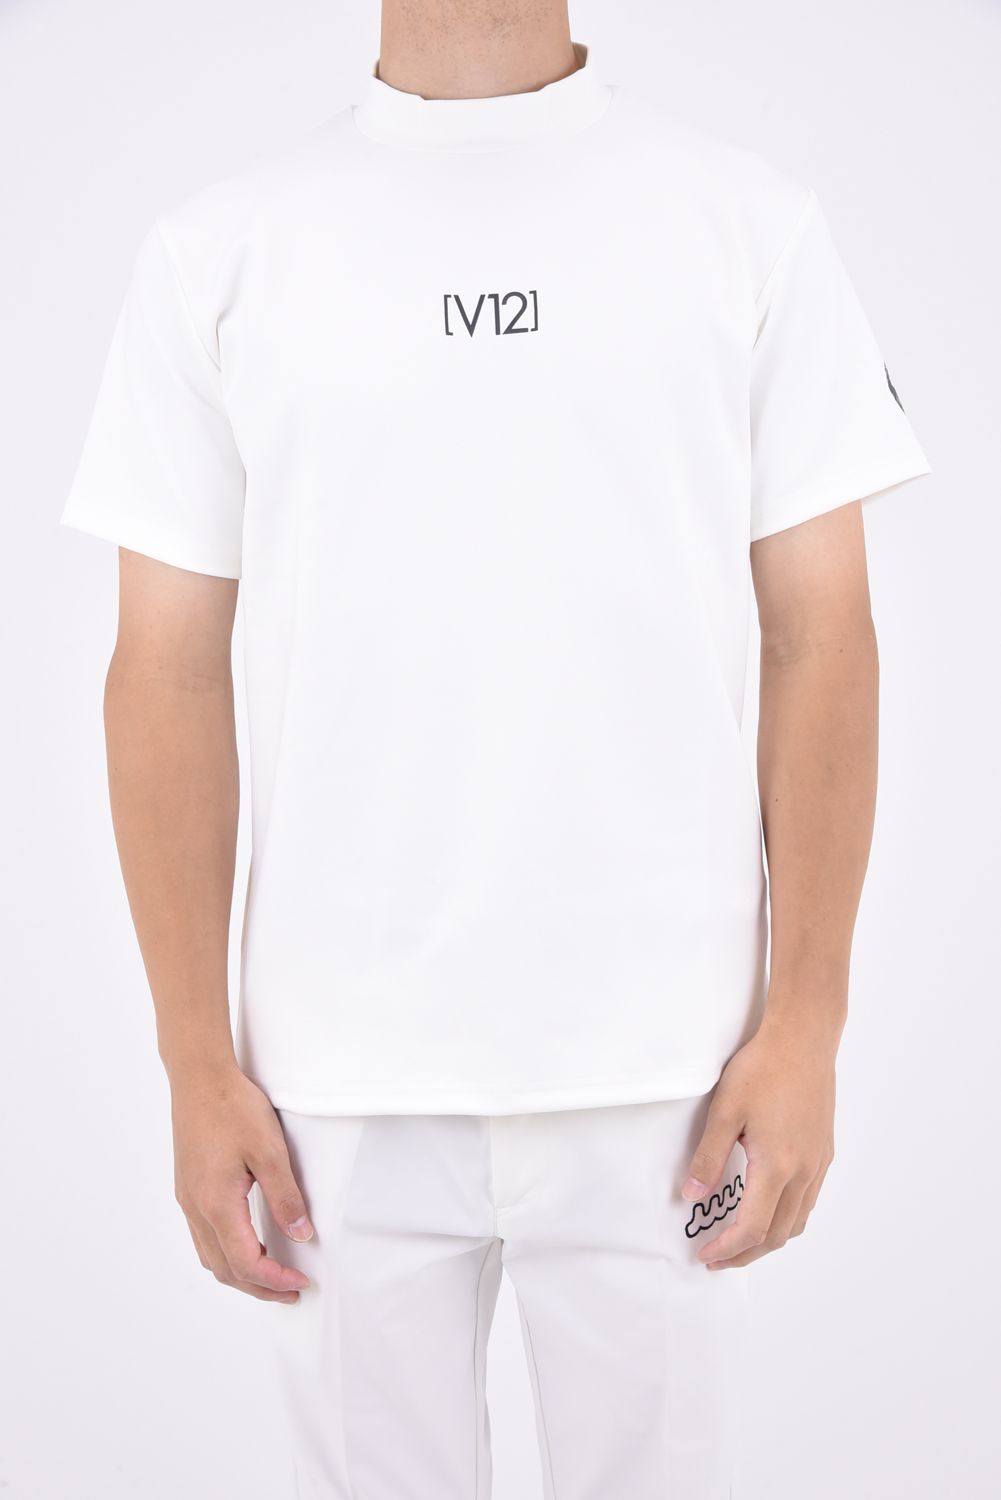 V12 - TONE MOCK / バックロゴ 半袖 モックネックTシャツ ブラック